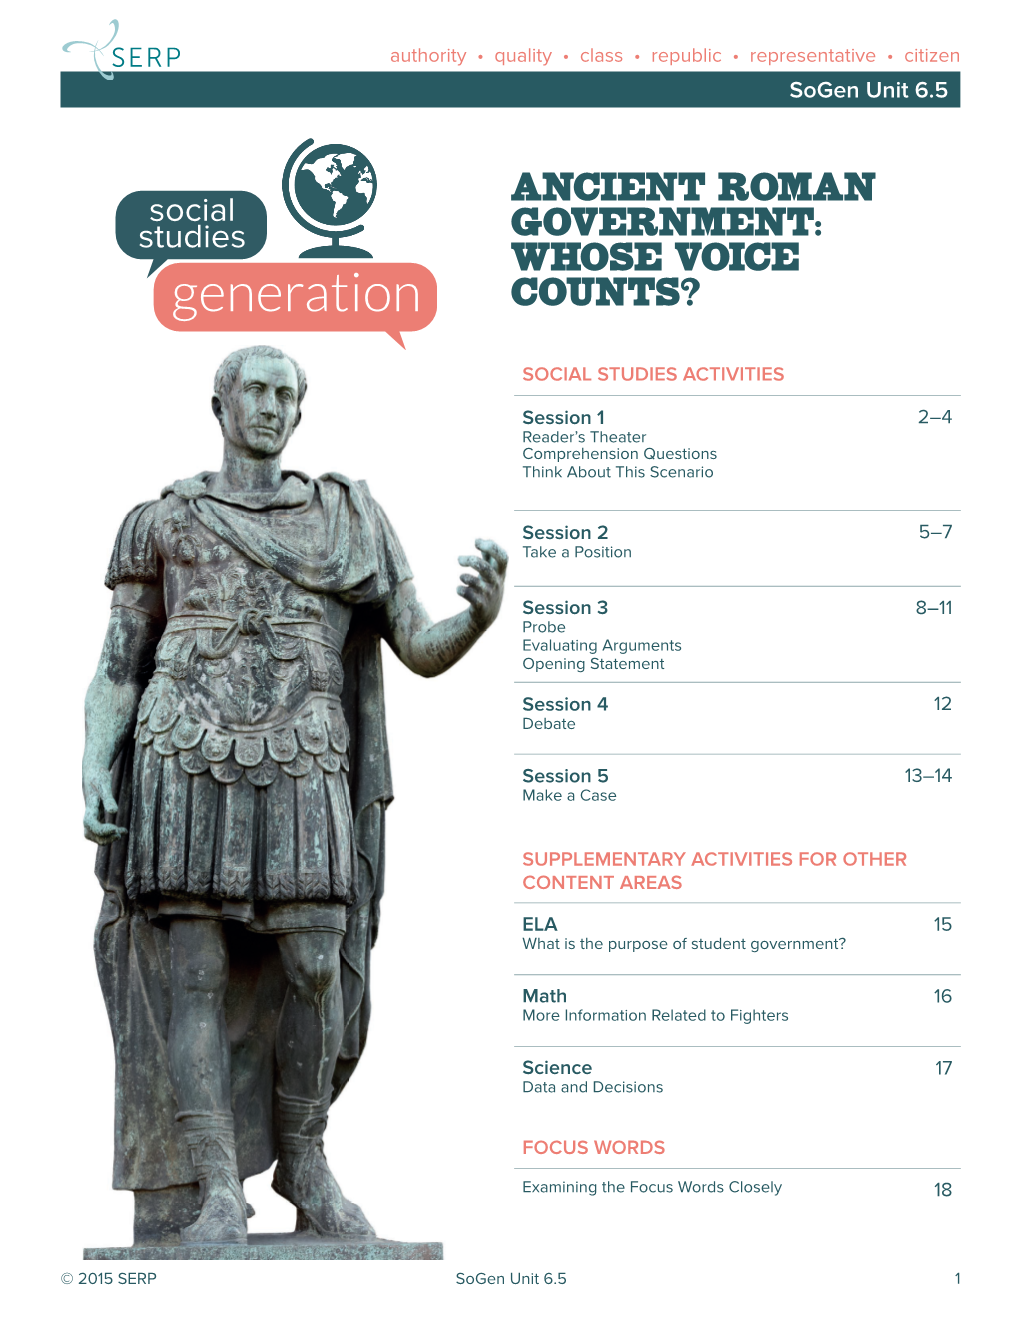 Ancient Roman Government: Whose Voice Counts?